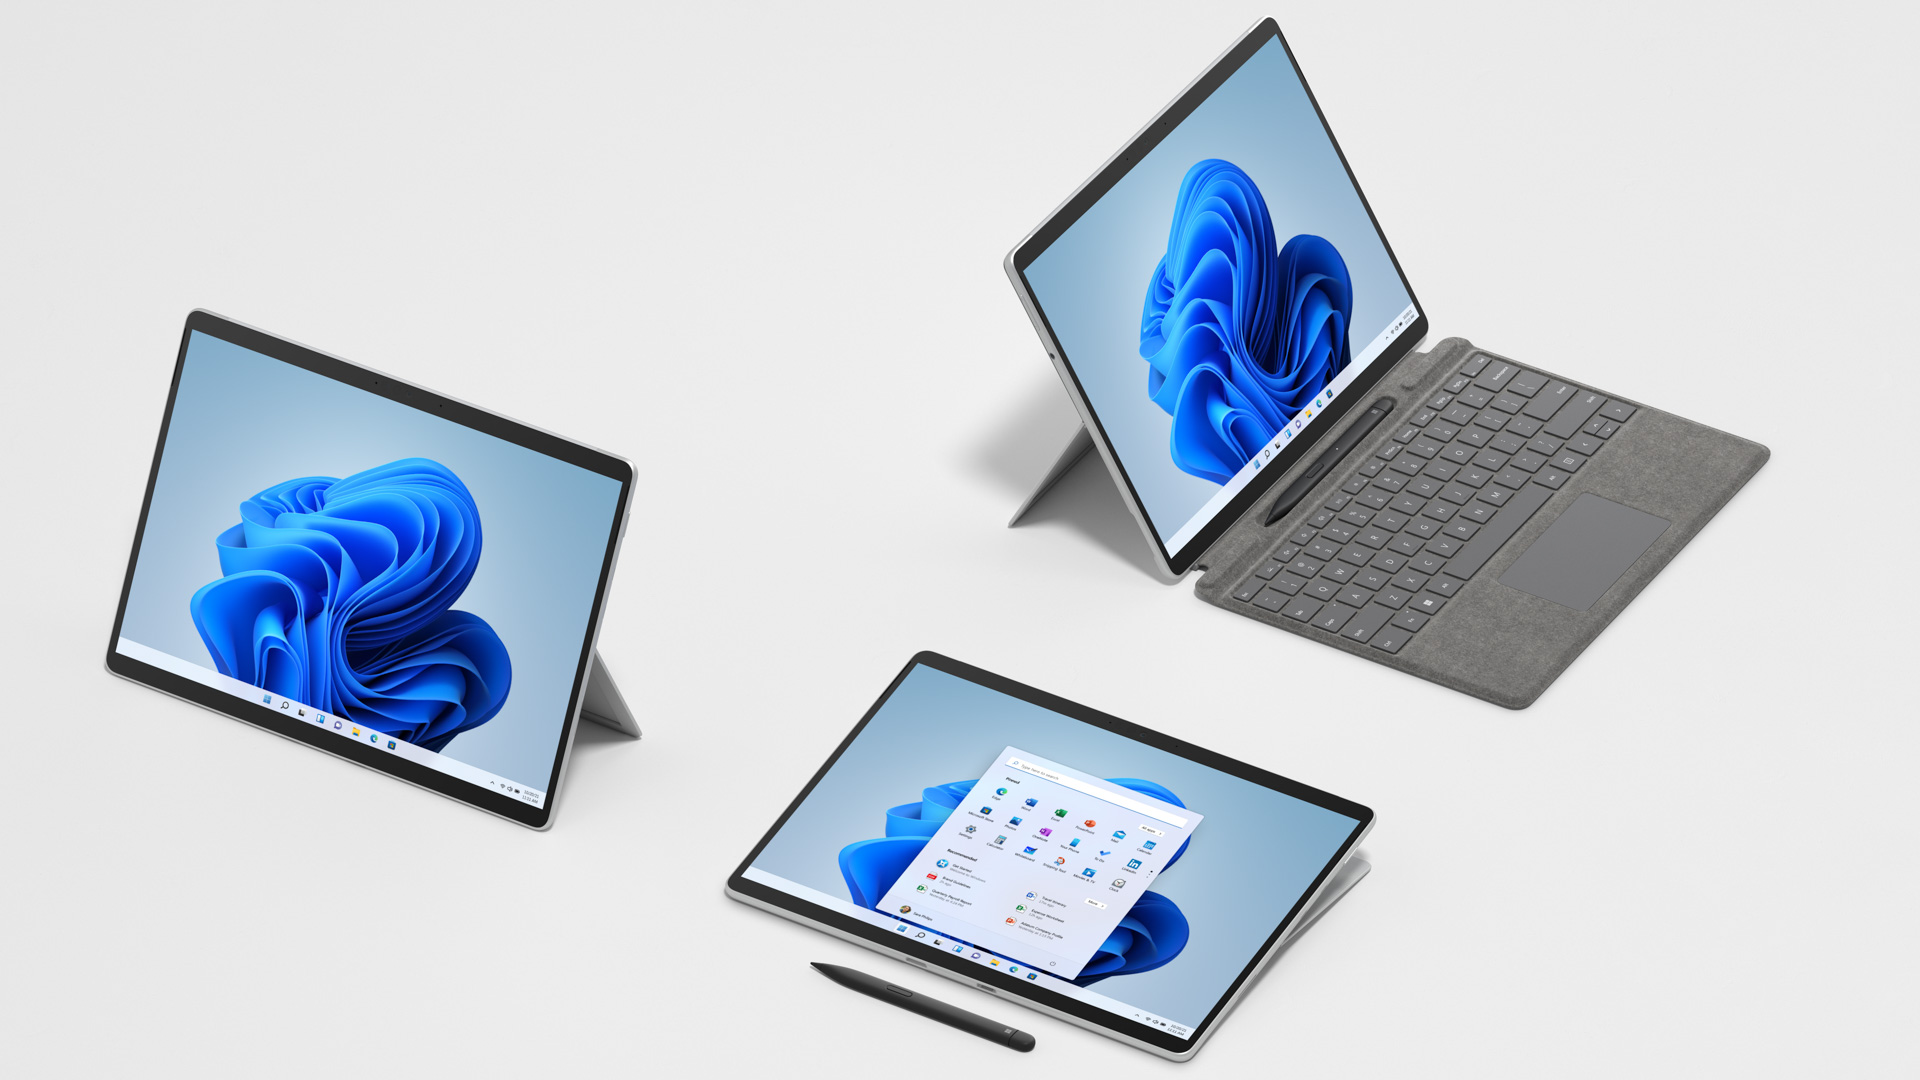 Surface Pro 8」登場。キーボード変更/新ペン。Thunderbolt 4対応で